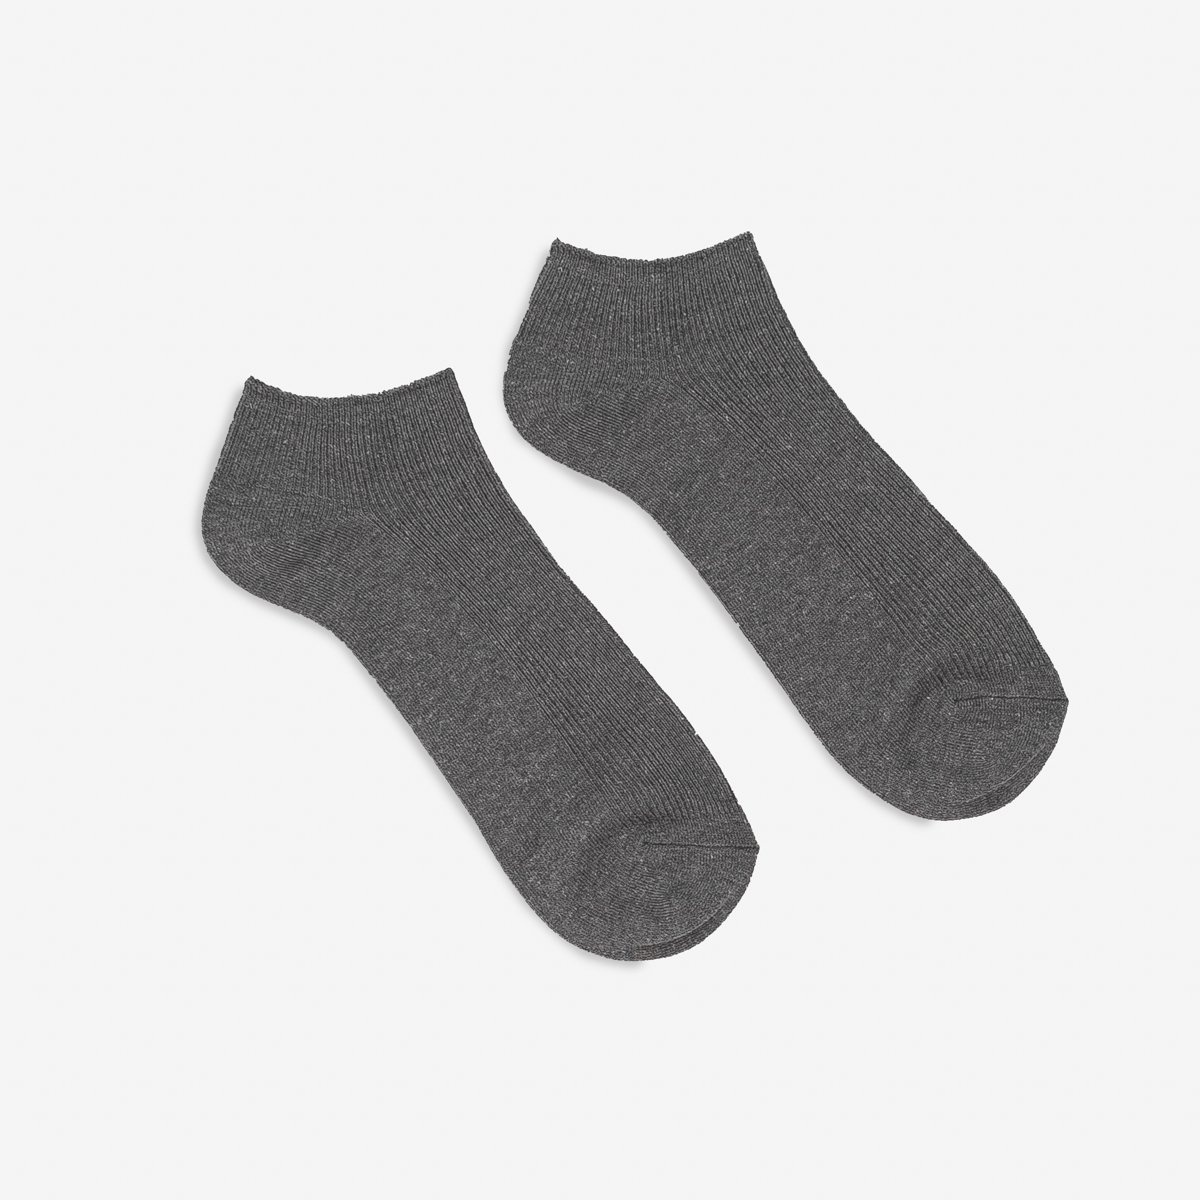 UTSS-GRY UTILITEES Mixed Cotton Sneaker Socks - Grey - 1